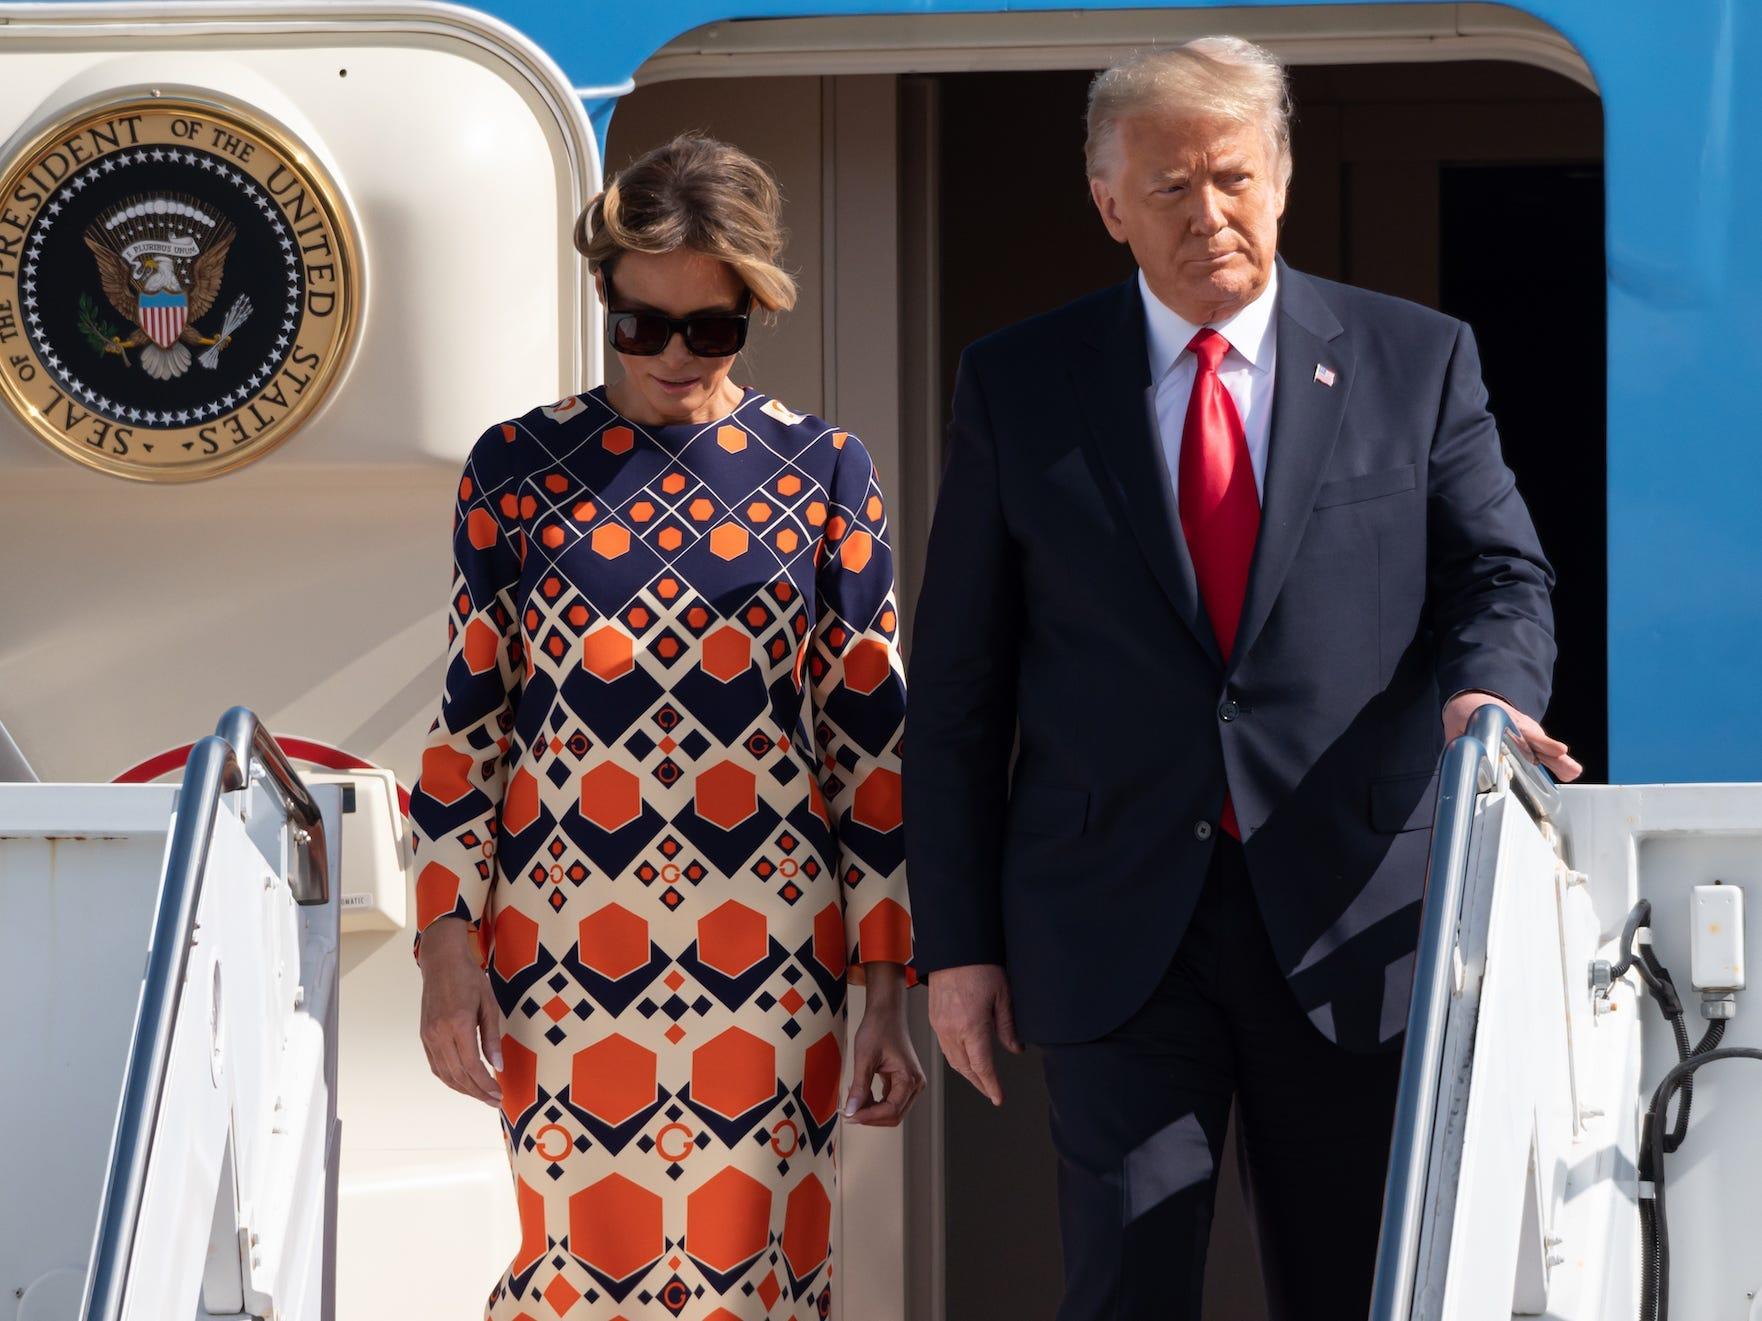 Melania Trump arrived in Florida wearing a $3,700 orange dress after ...